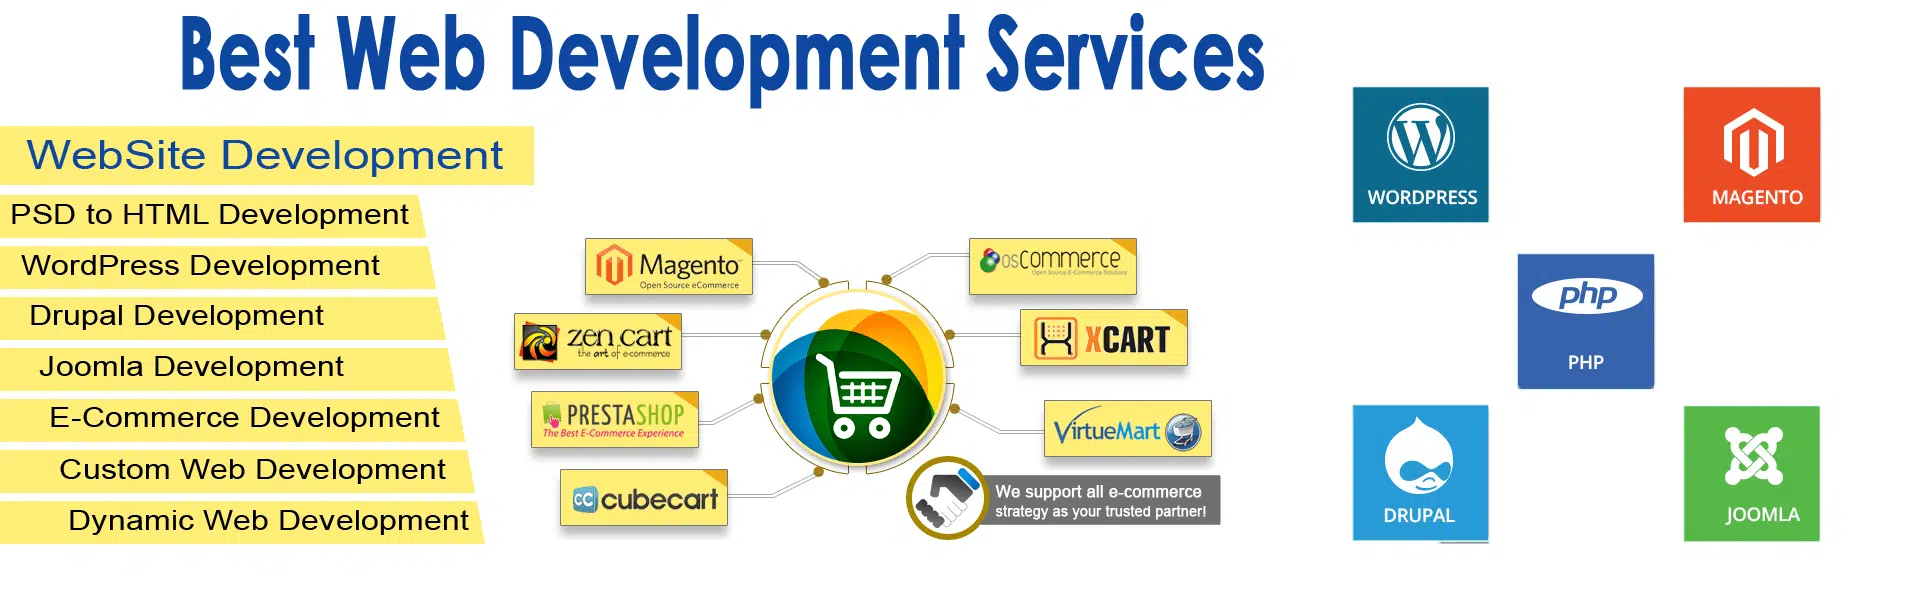 Website Development Services Banner New